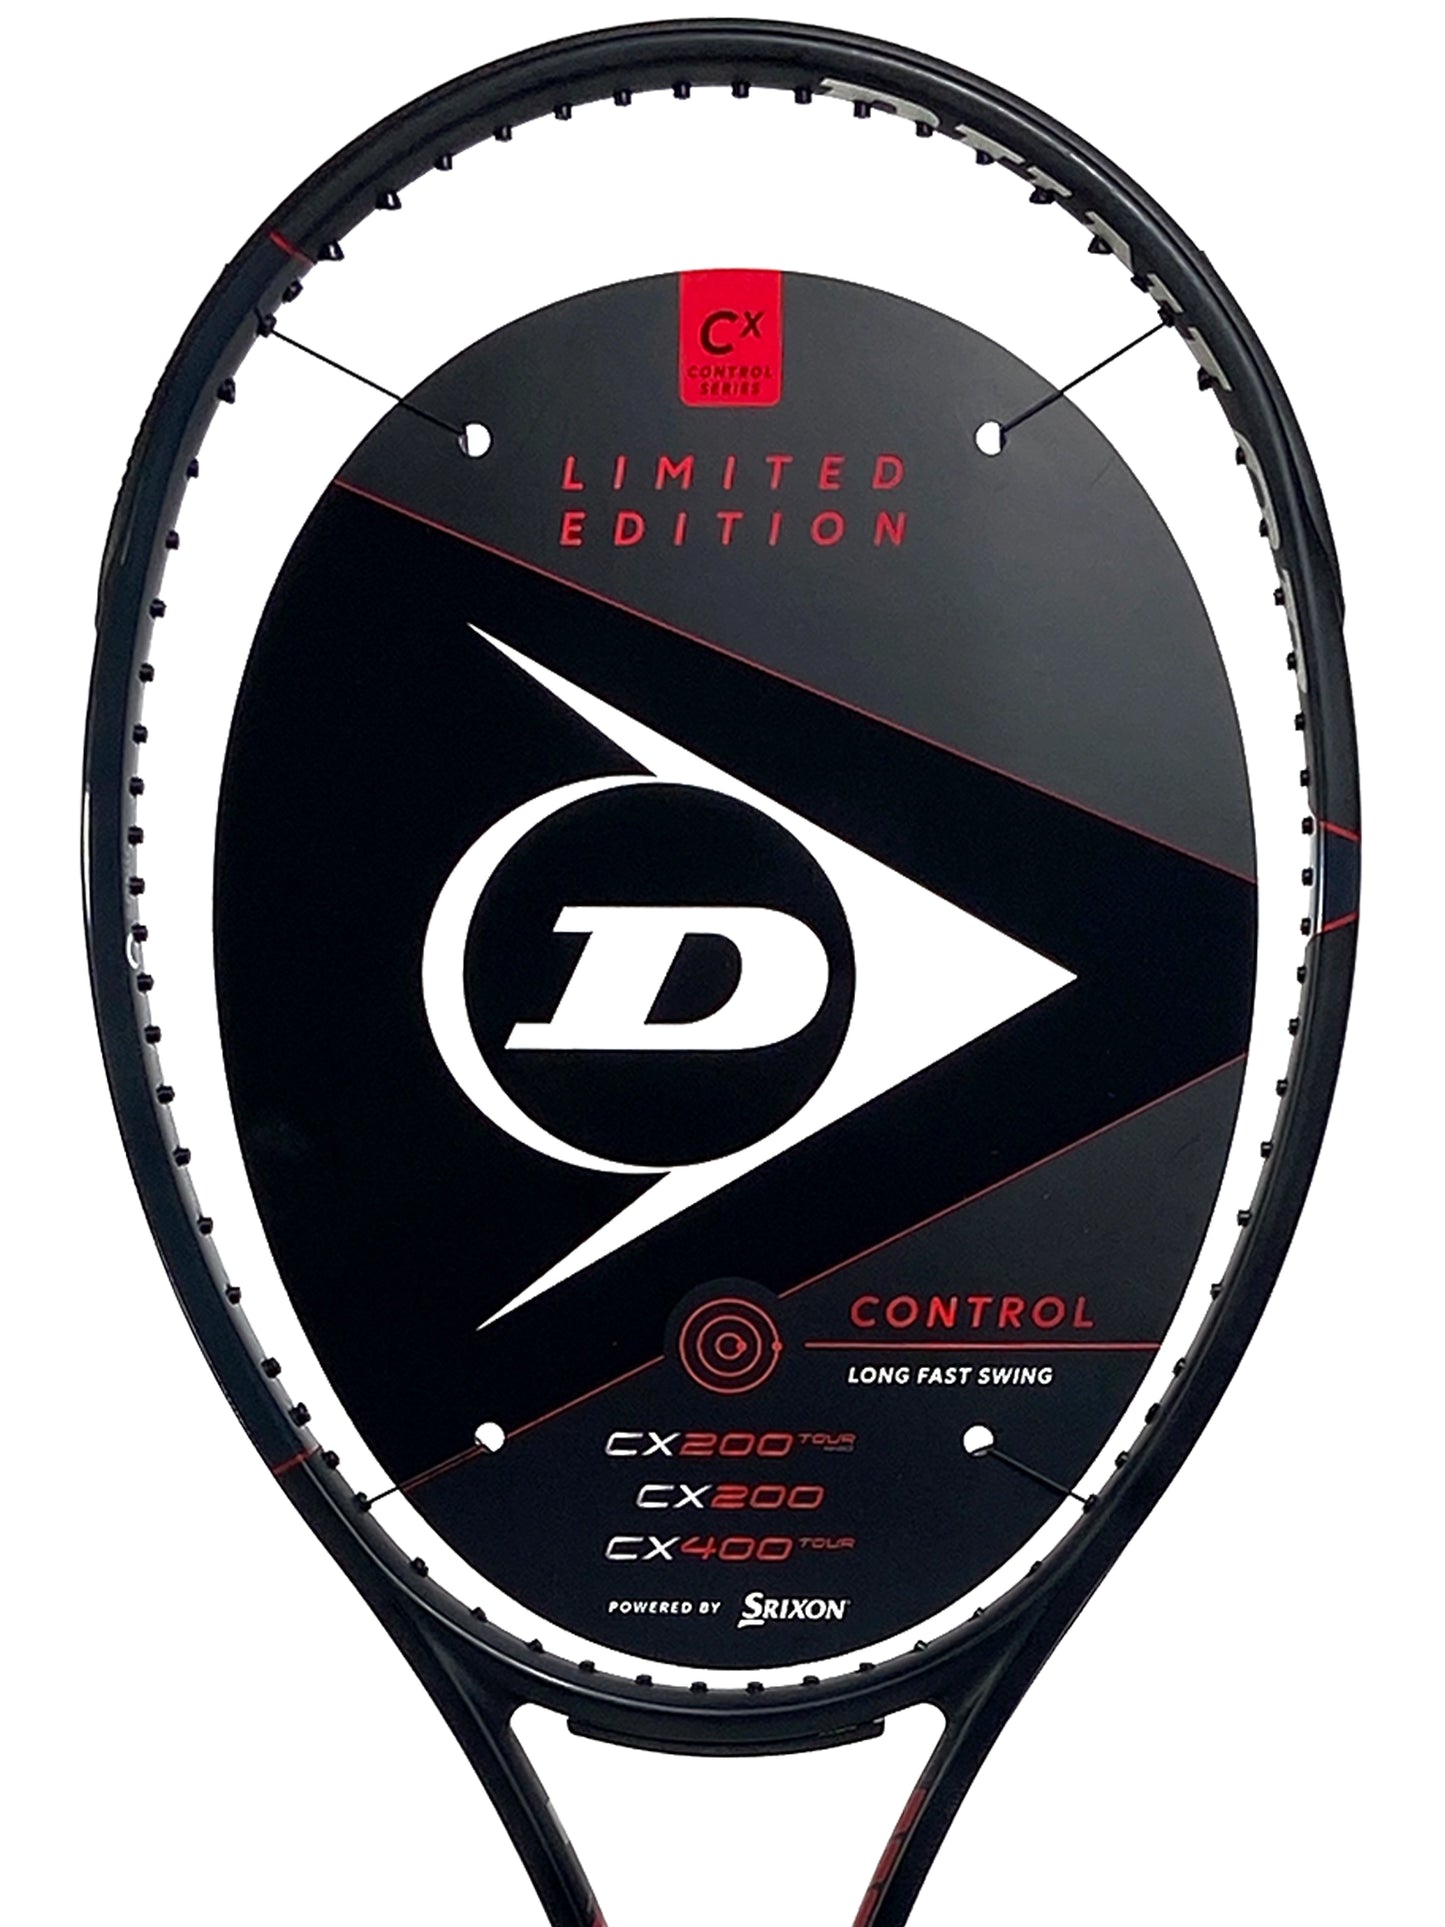 Dunlop CX 200 Limited Edition | Tenniszon